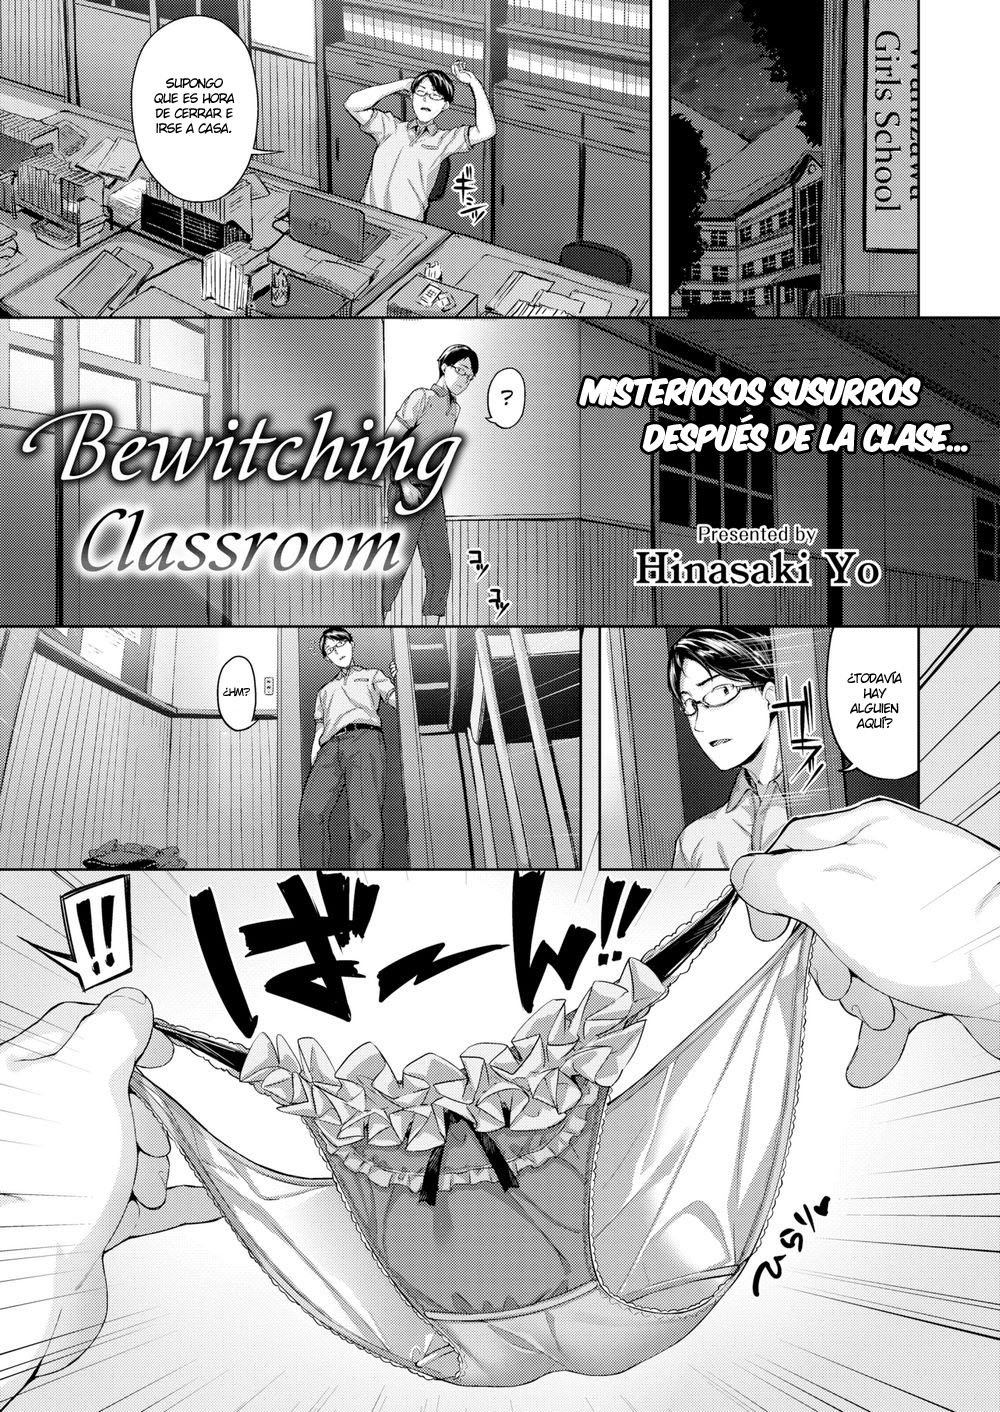 Salon de clases embrujado - Hinasaki Yo - 0